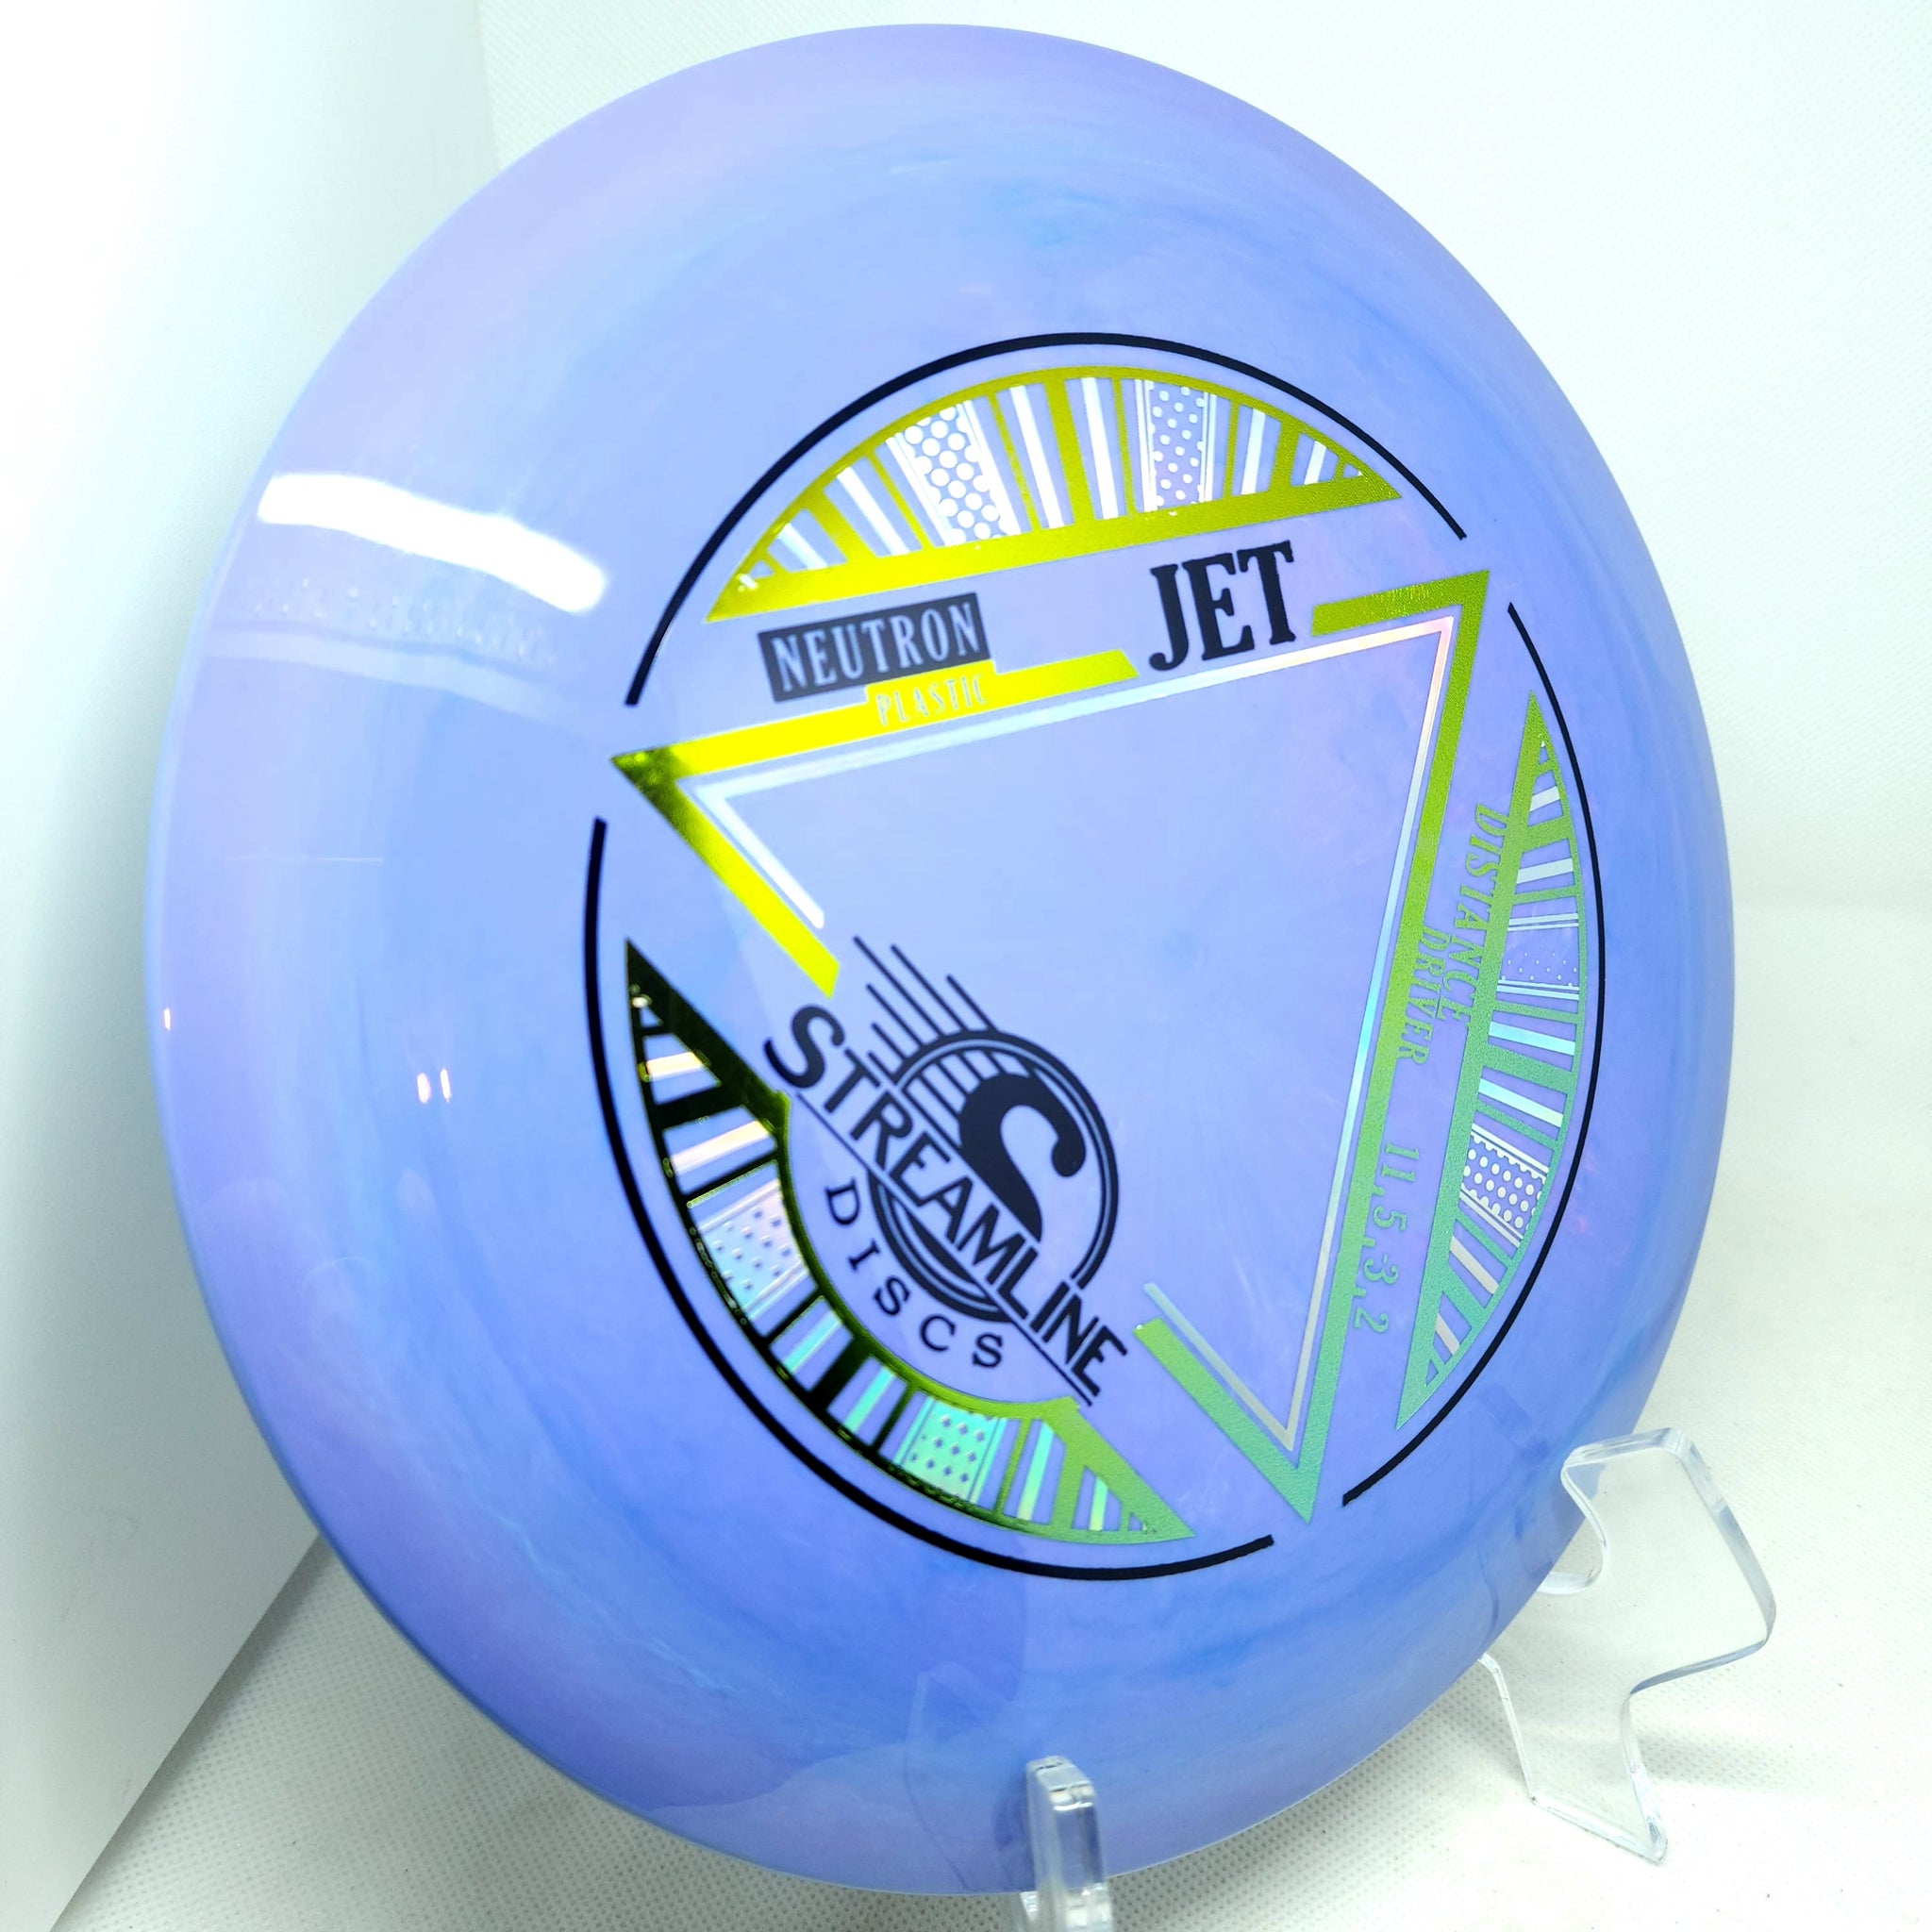 Jet (Neutron)